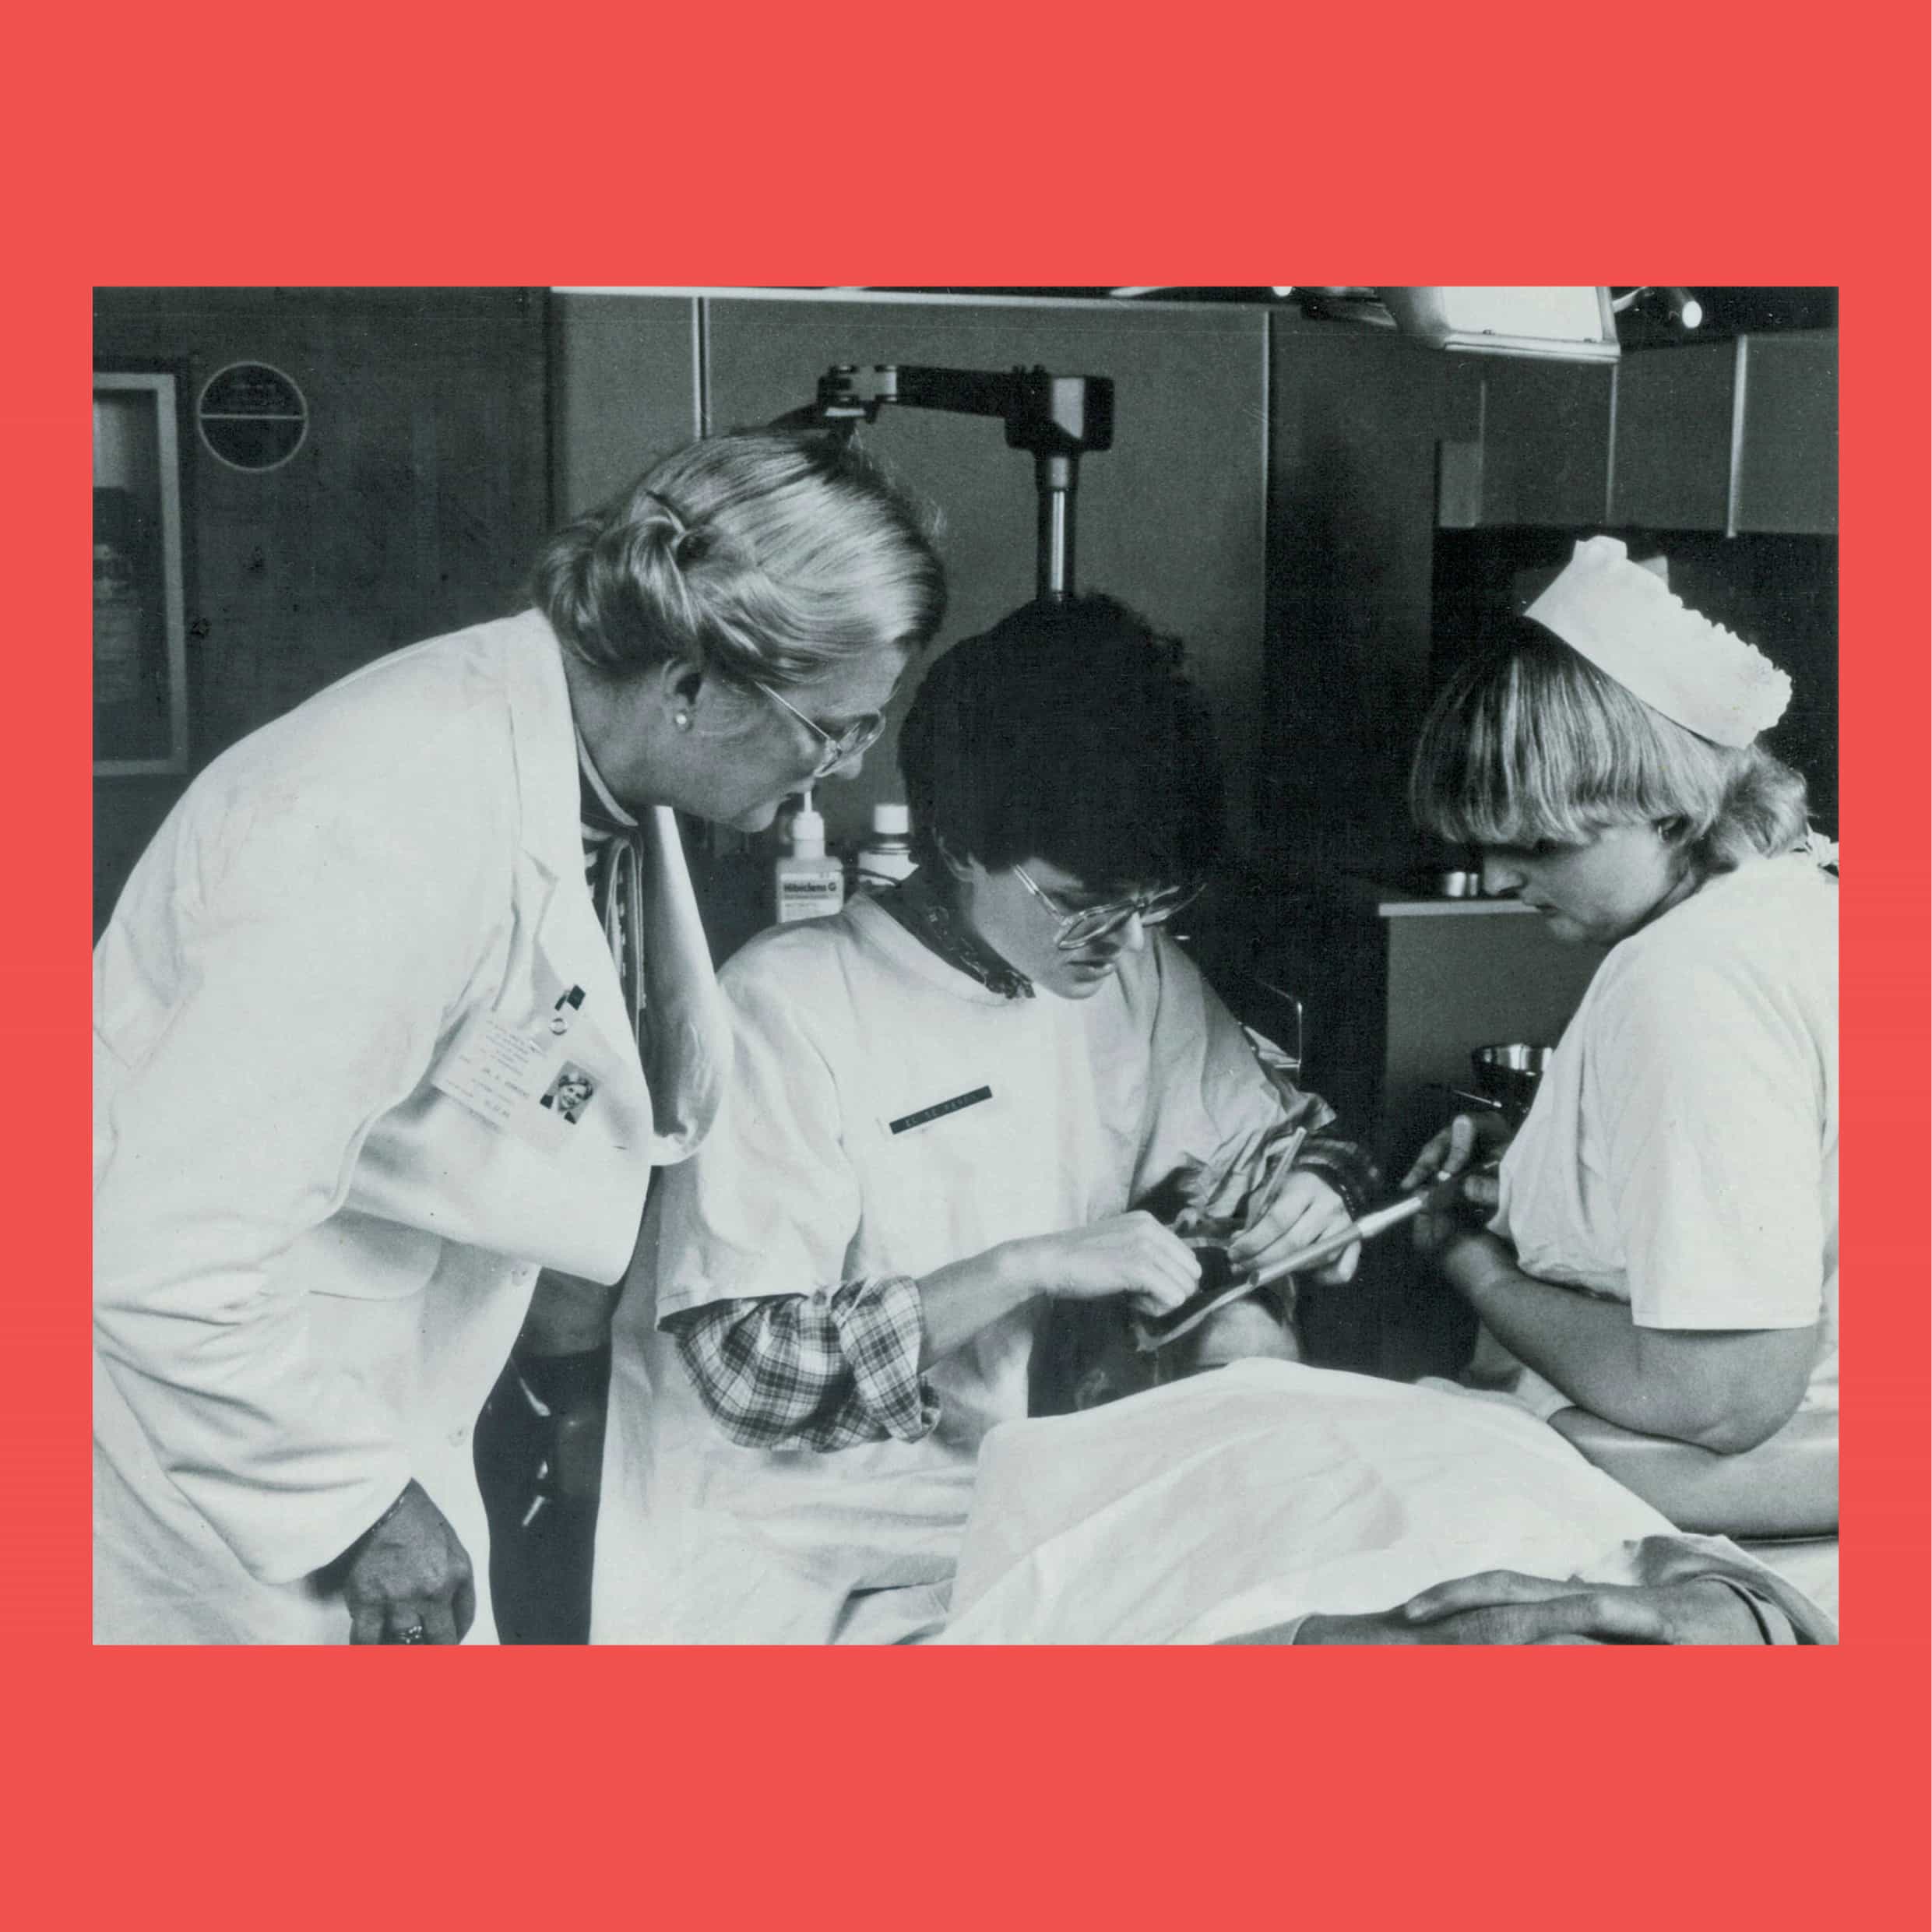  Dr Asja Alma Vernieks teaching, c. 1979, photograph, 10.2 × 12.8 cm. HFADM 3769.3, Henry Forman Atkinson Dental Museum, University of Melbourne. 